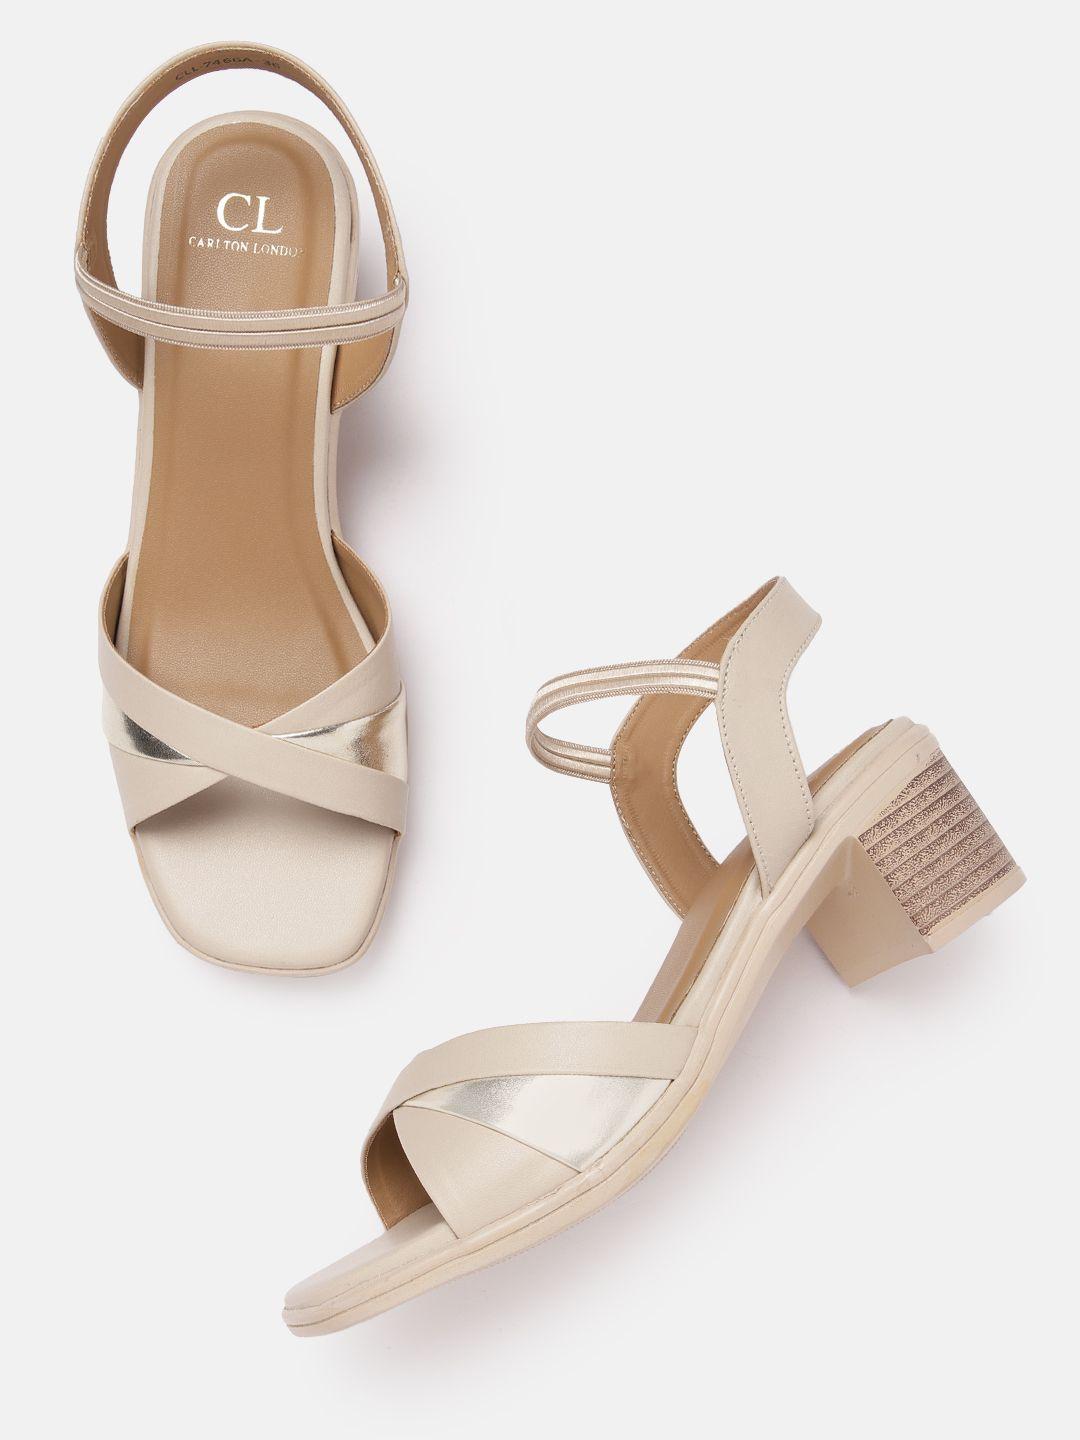 carlton-london-women-colourblocked-block-heels